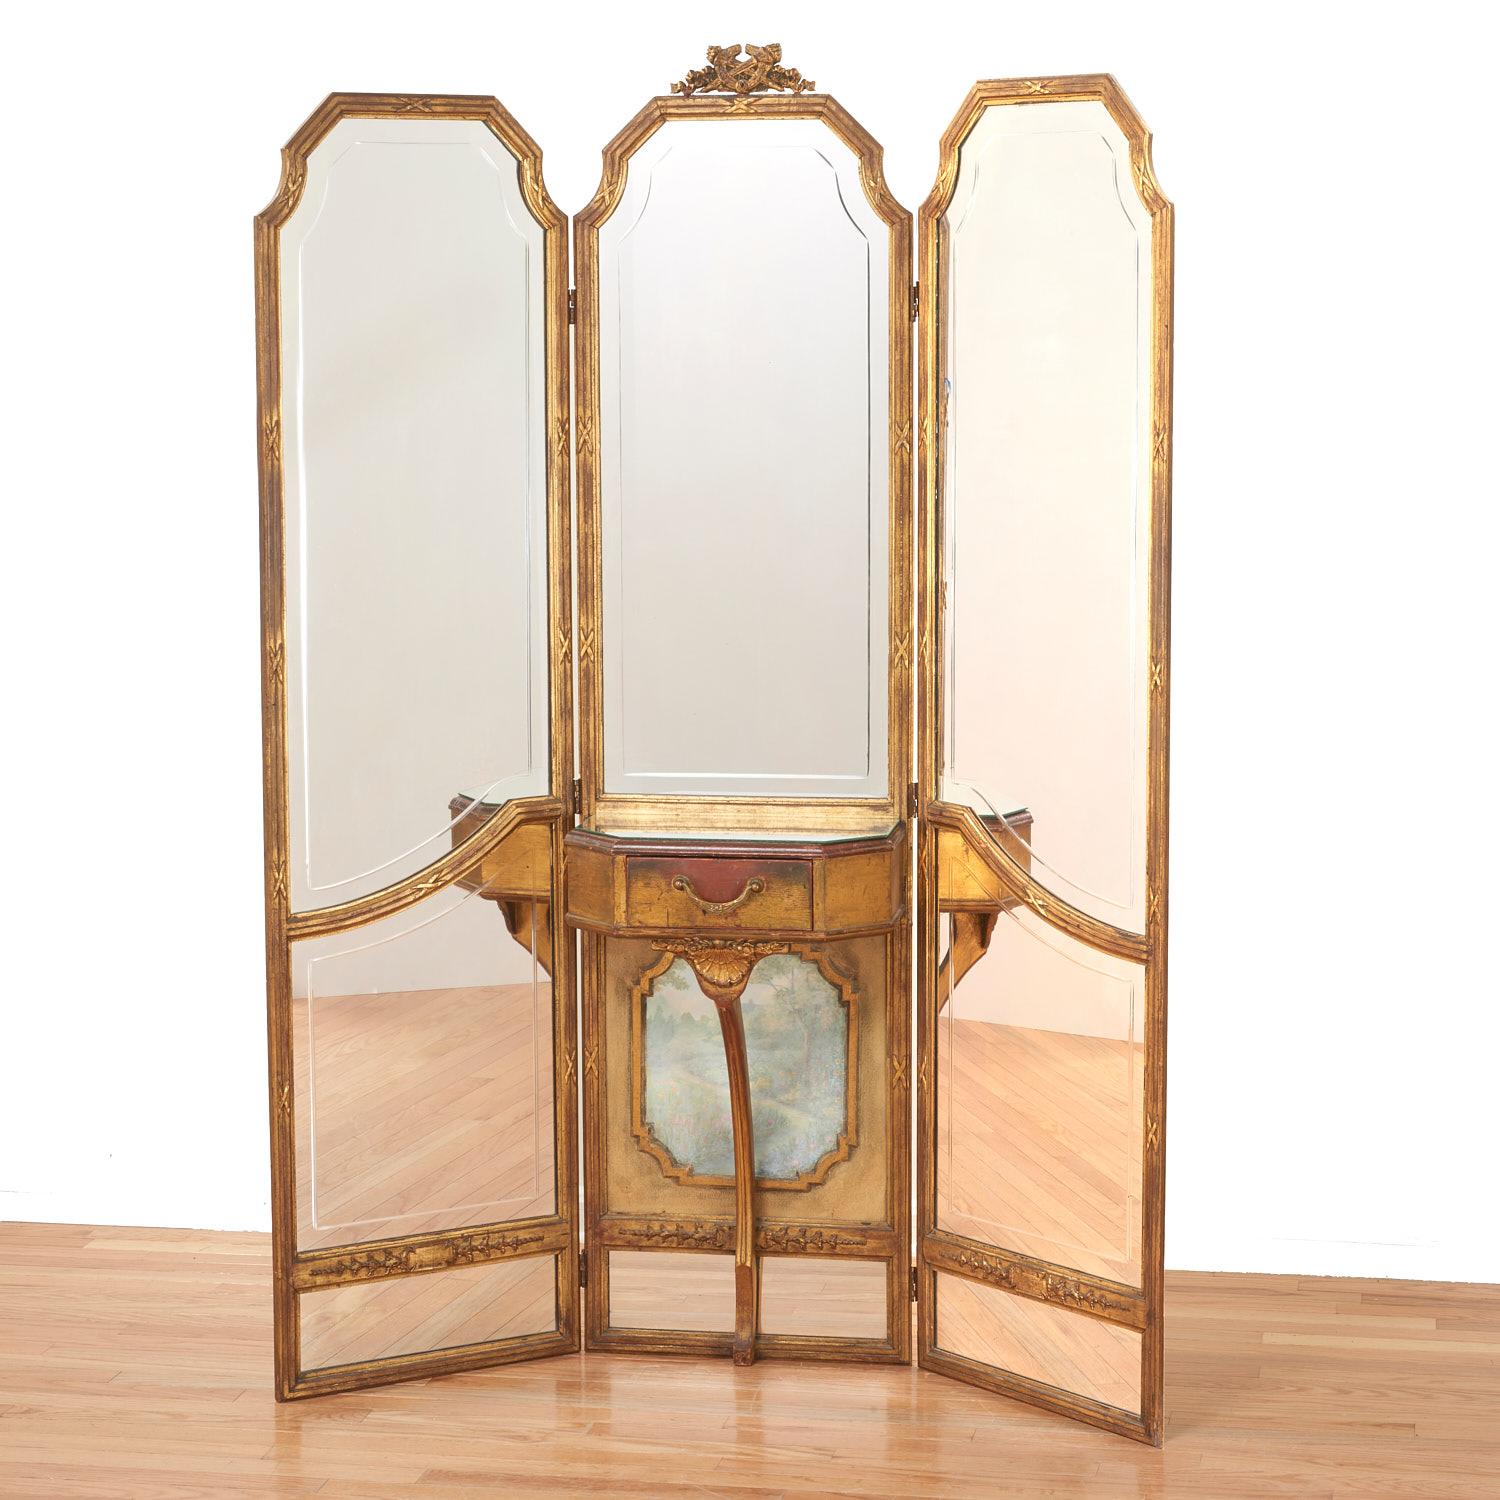 Panel Mirrored Vanity Screen, Three Panel Vanity Mirror